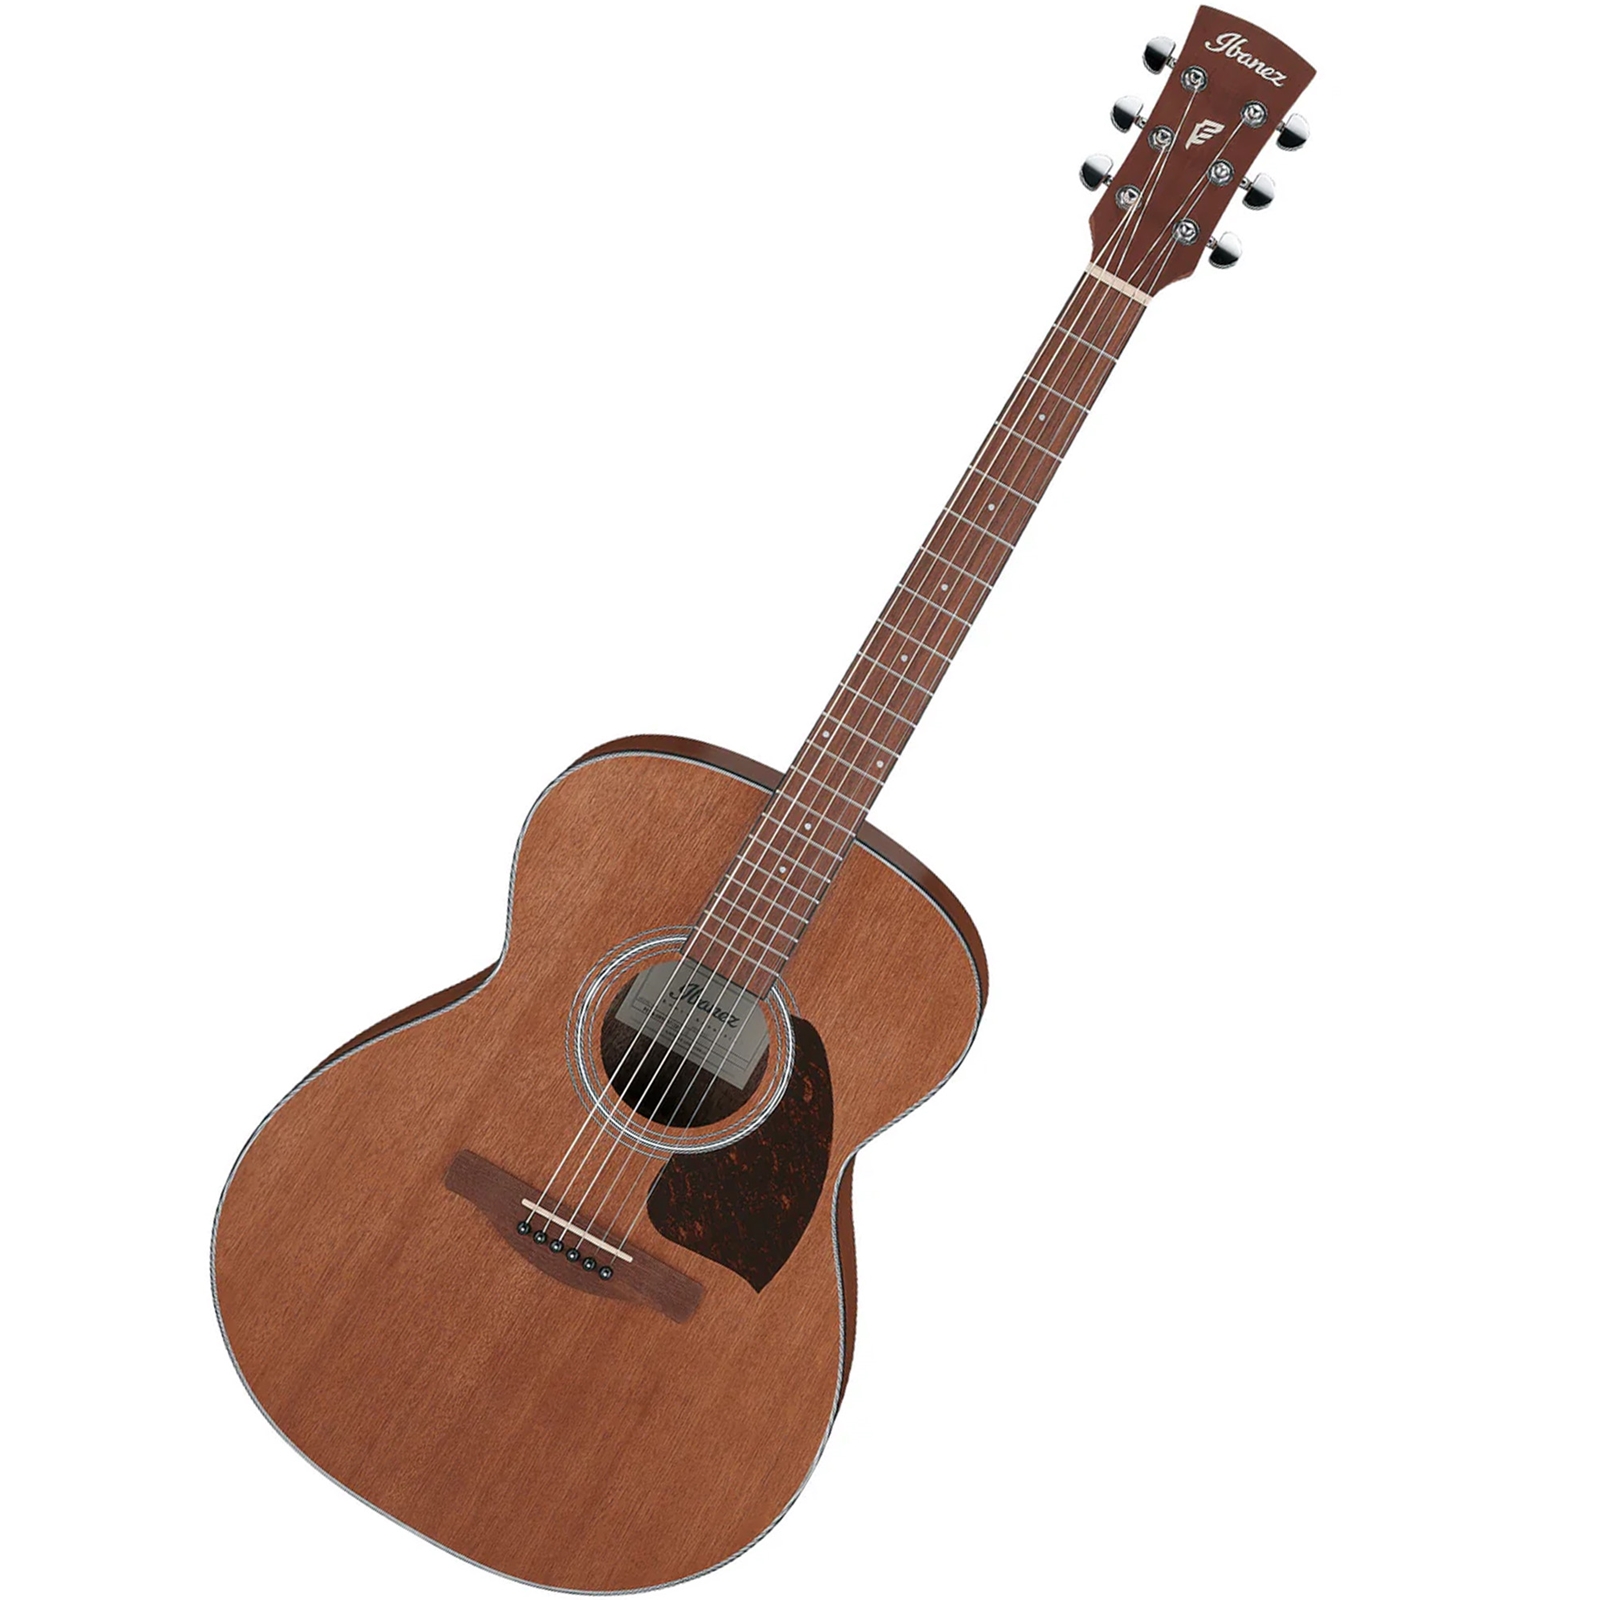 Ibanez PF54 Acoustic Guitar - Open-Pore Natural